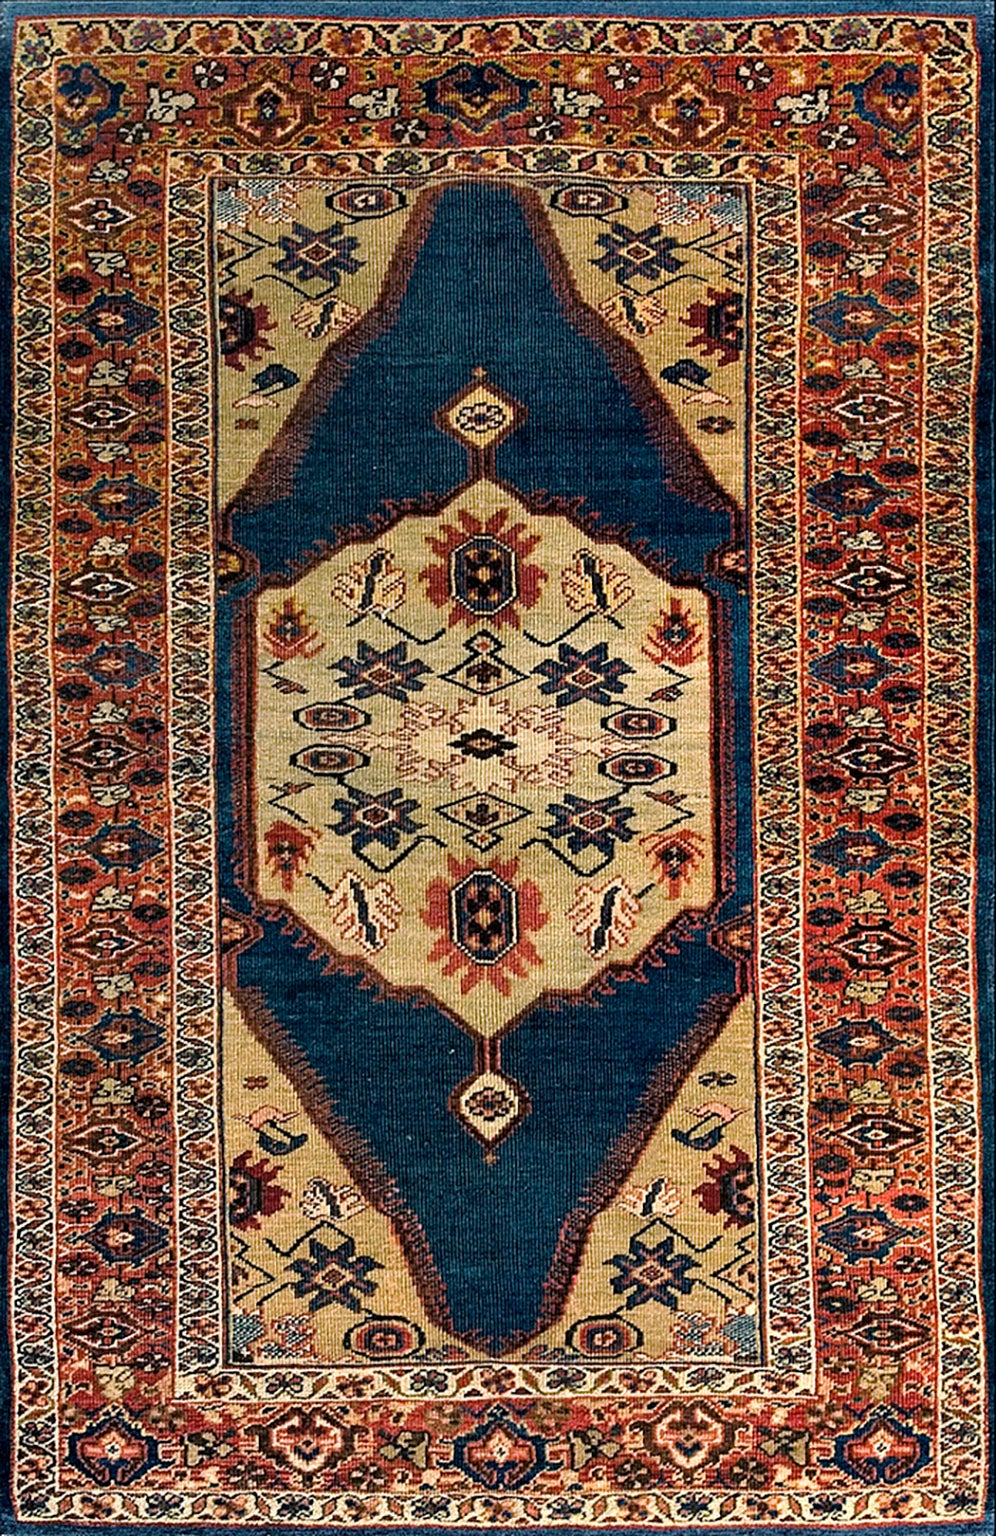 19th Century Persian Sultanabad Carpet ( 4'5" x 6'9" - 135 x 206 )